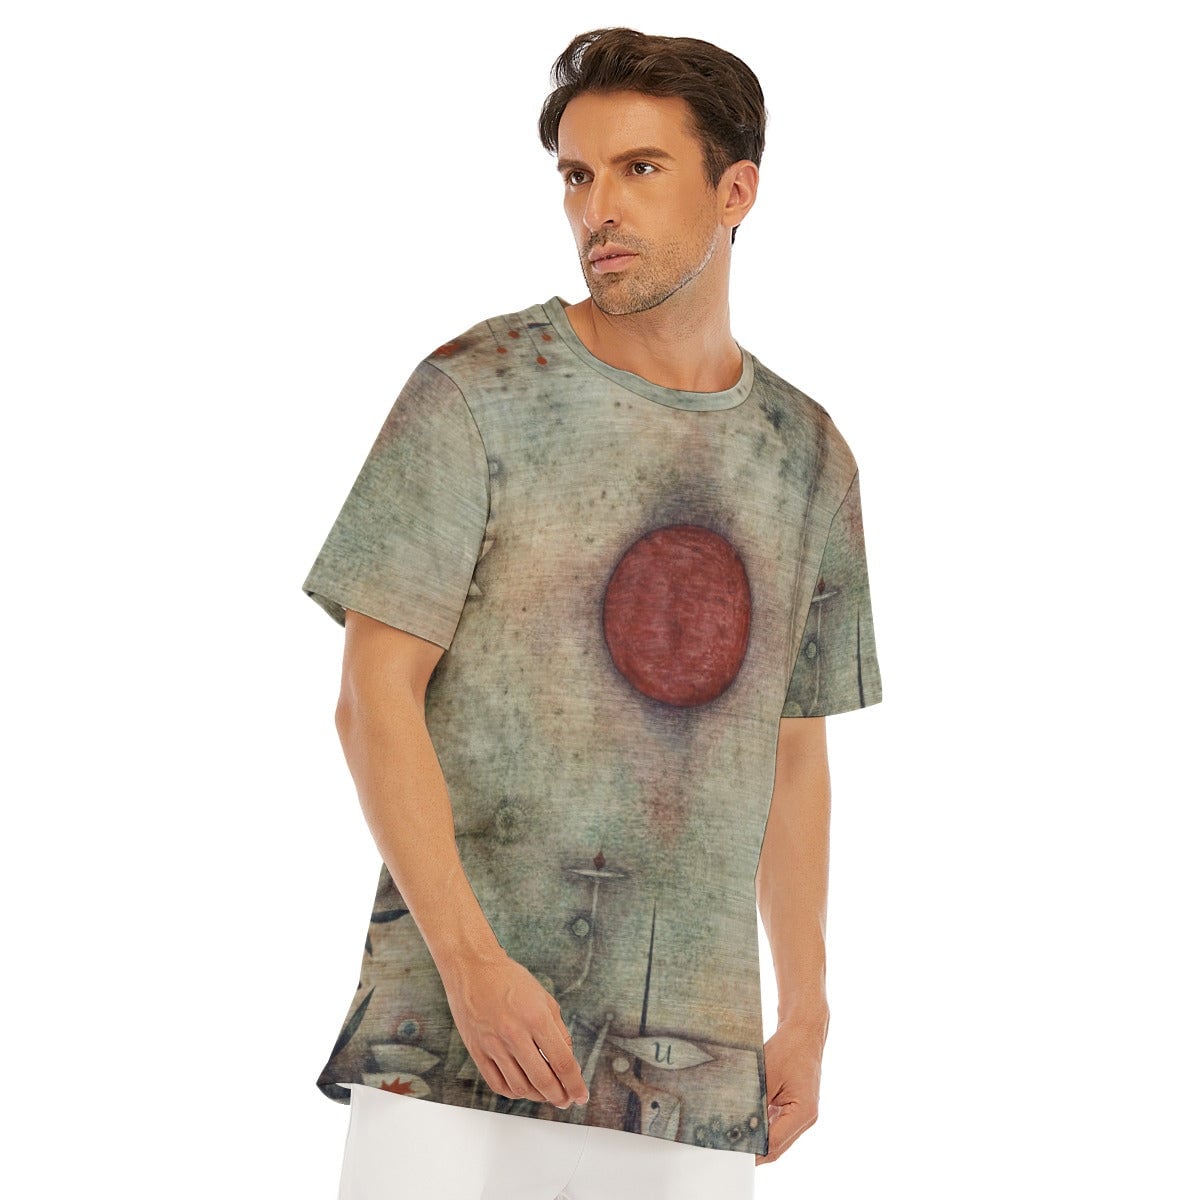 Ad Marginem Paul Klee T-Shirt - Perfect for Art Lovers